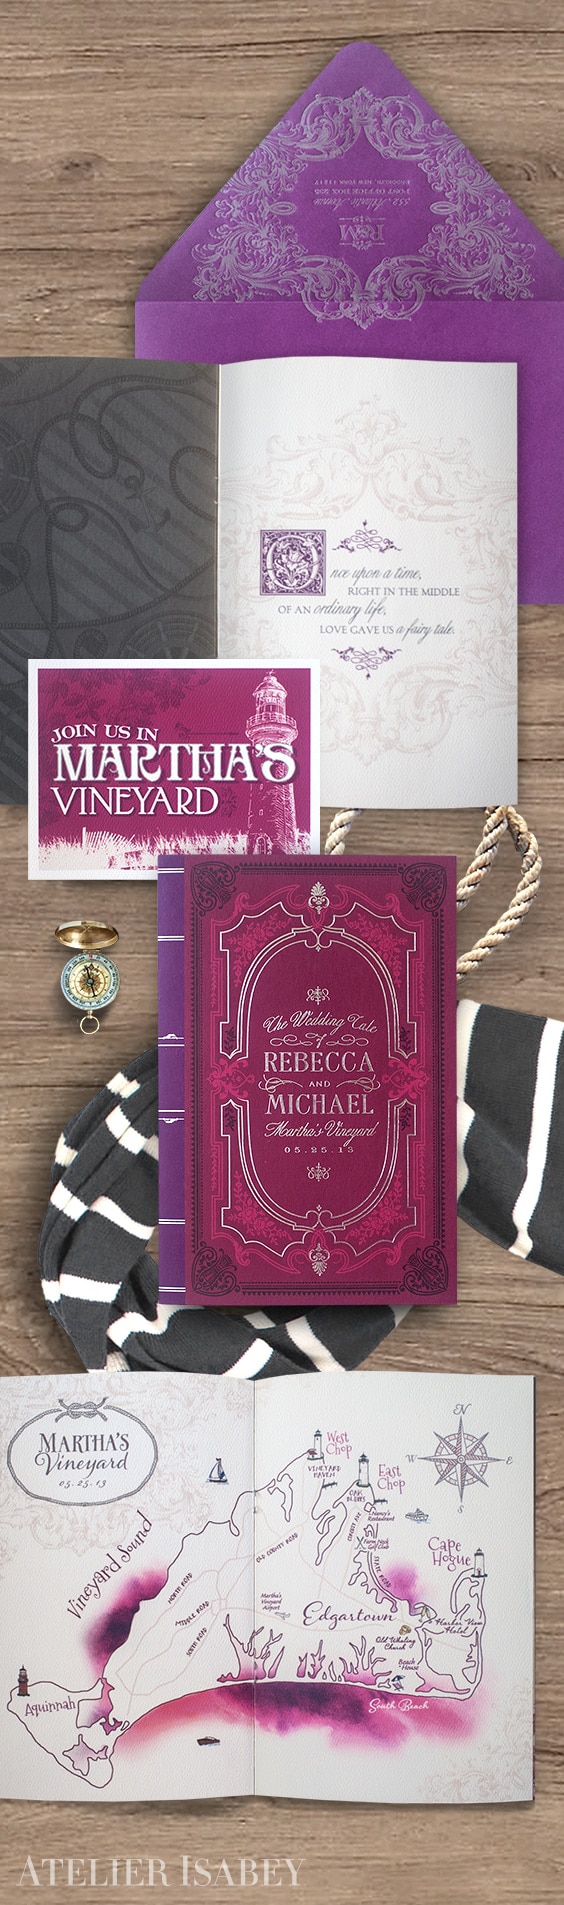 Martha's Vineyard fairytale inspired wedding invitation